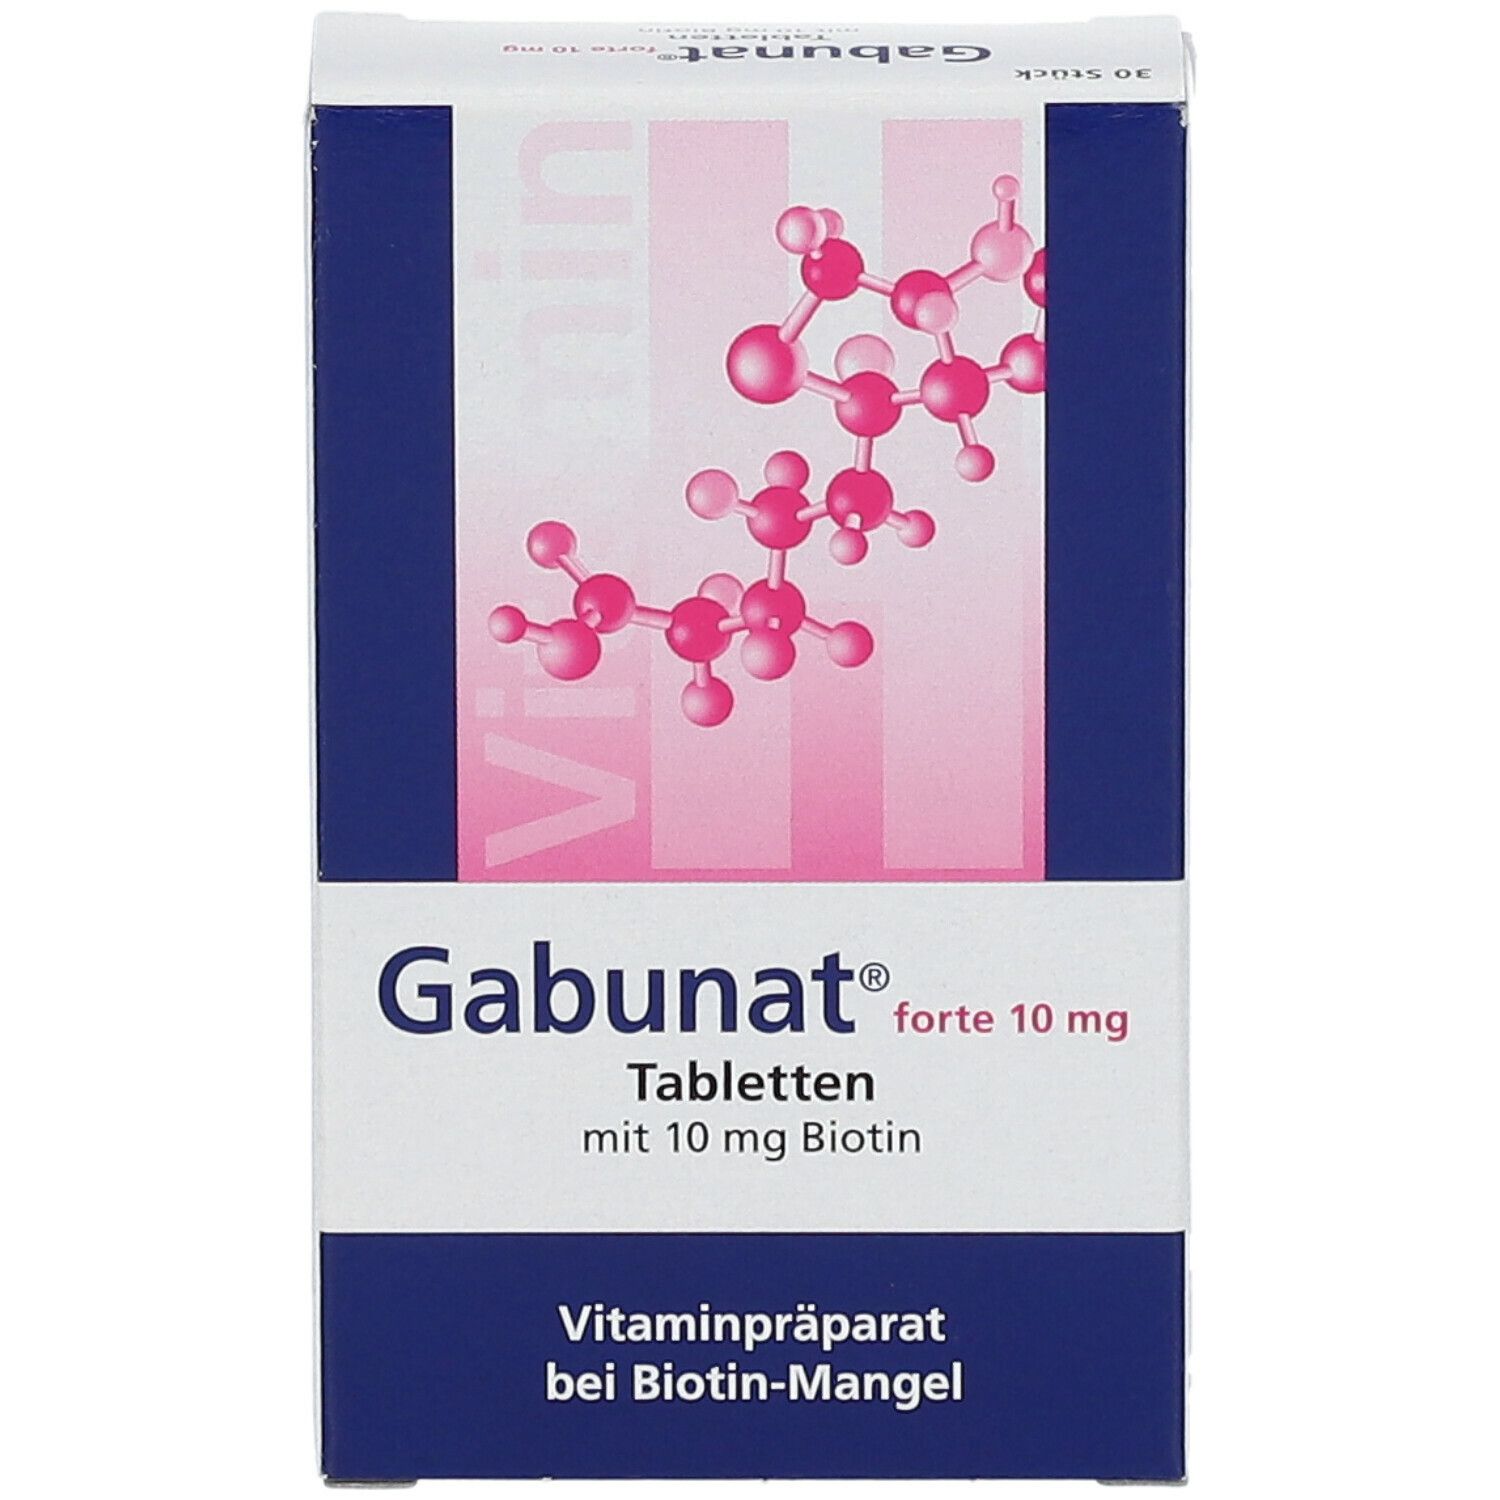 Gabunat® forte 10 mg